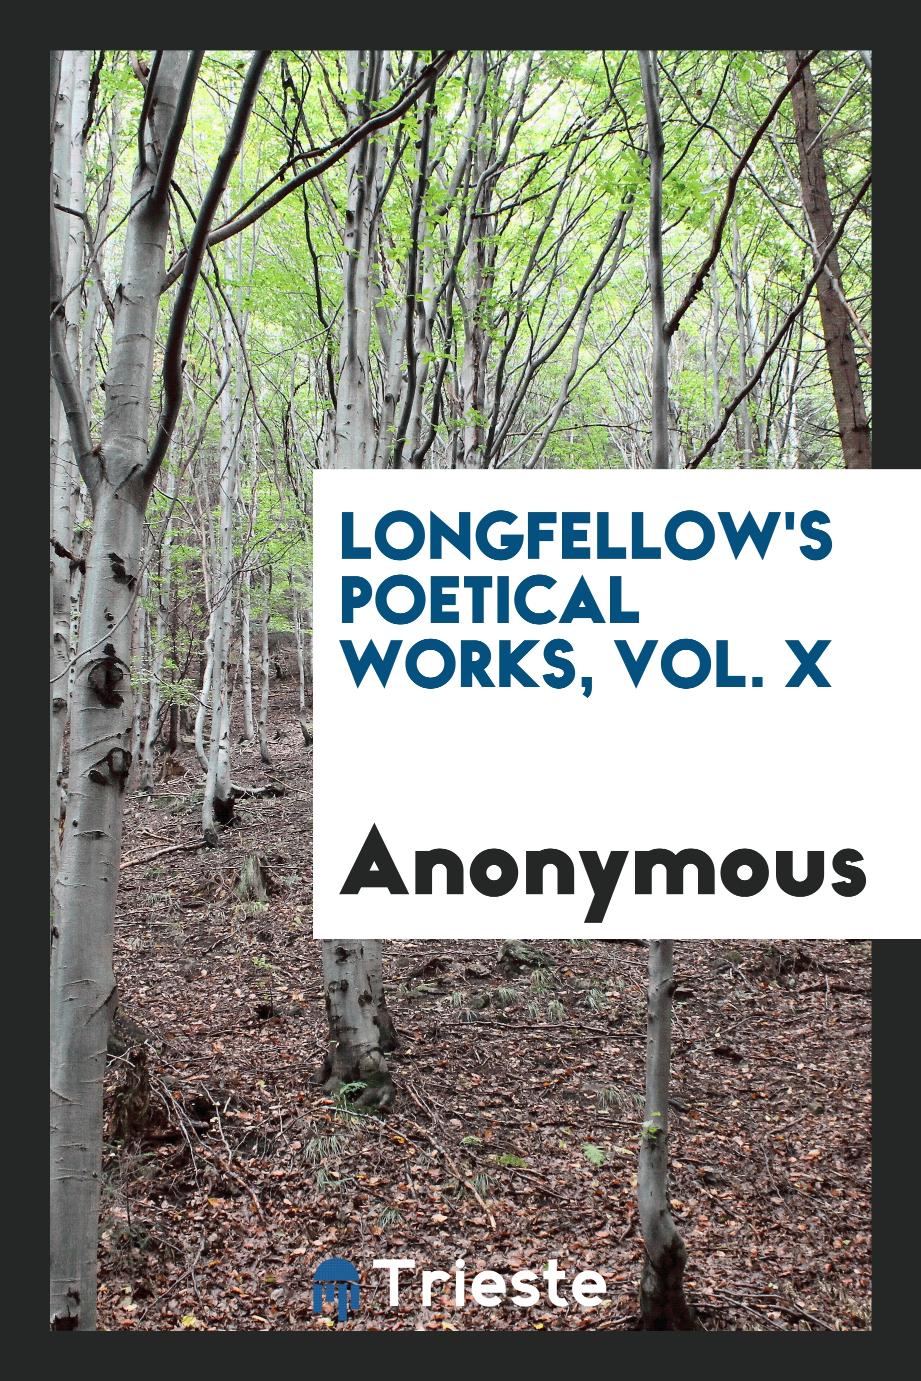 Longfellow's poetical works, Vol. X